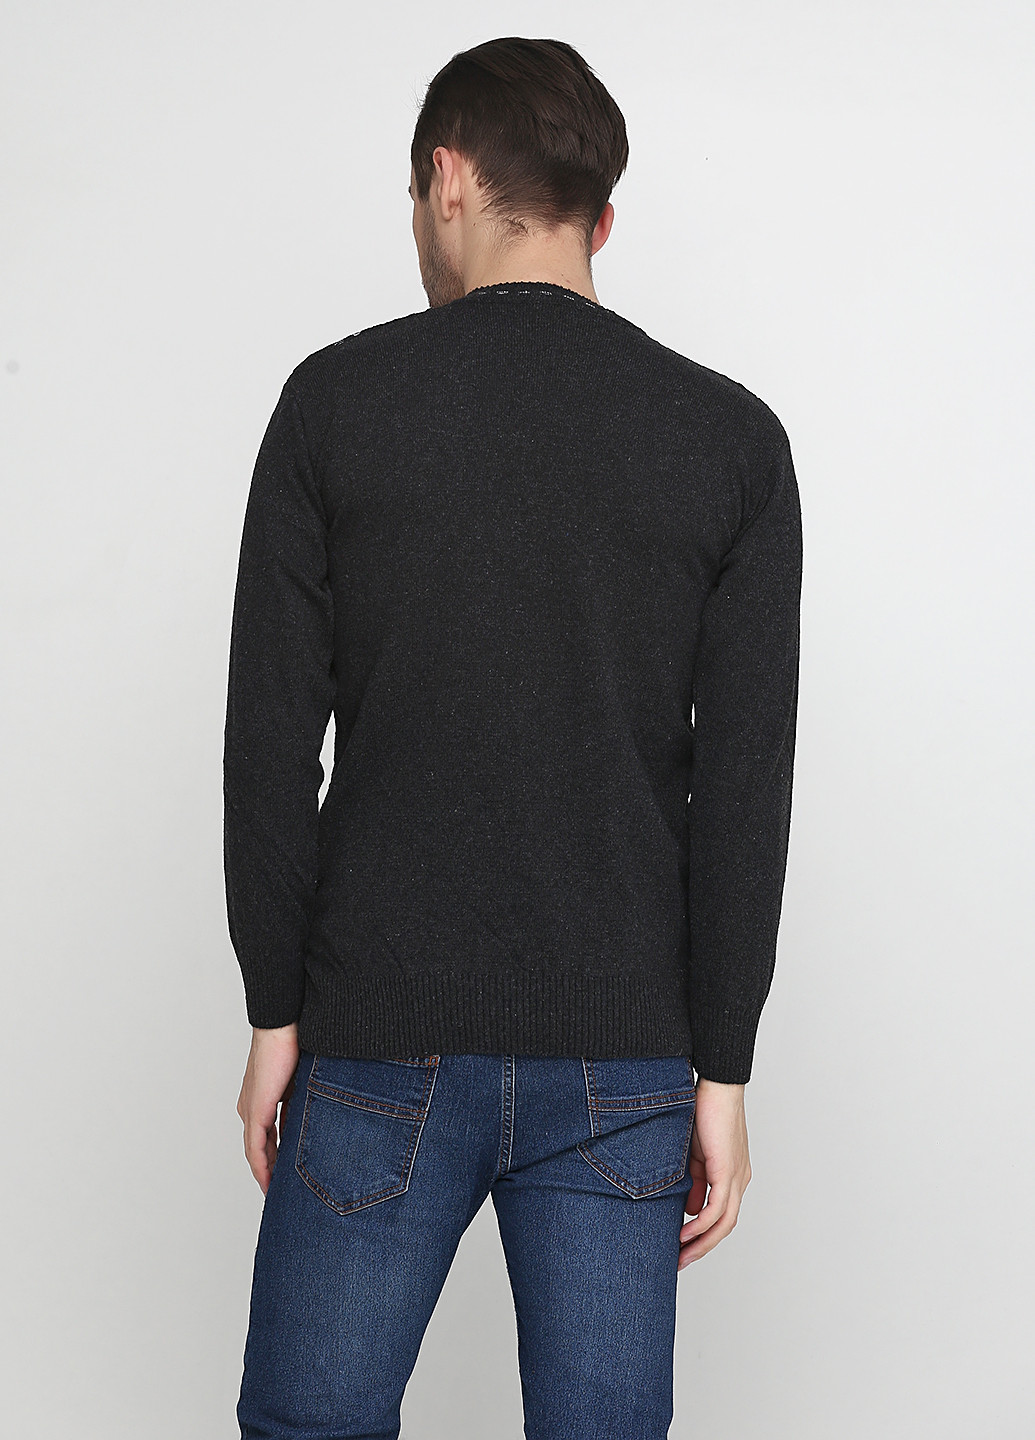 Темно-серый демисезонный пуловер пуловер Enbiya